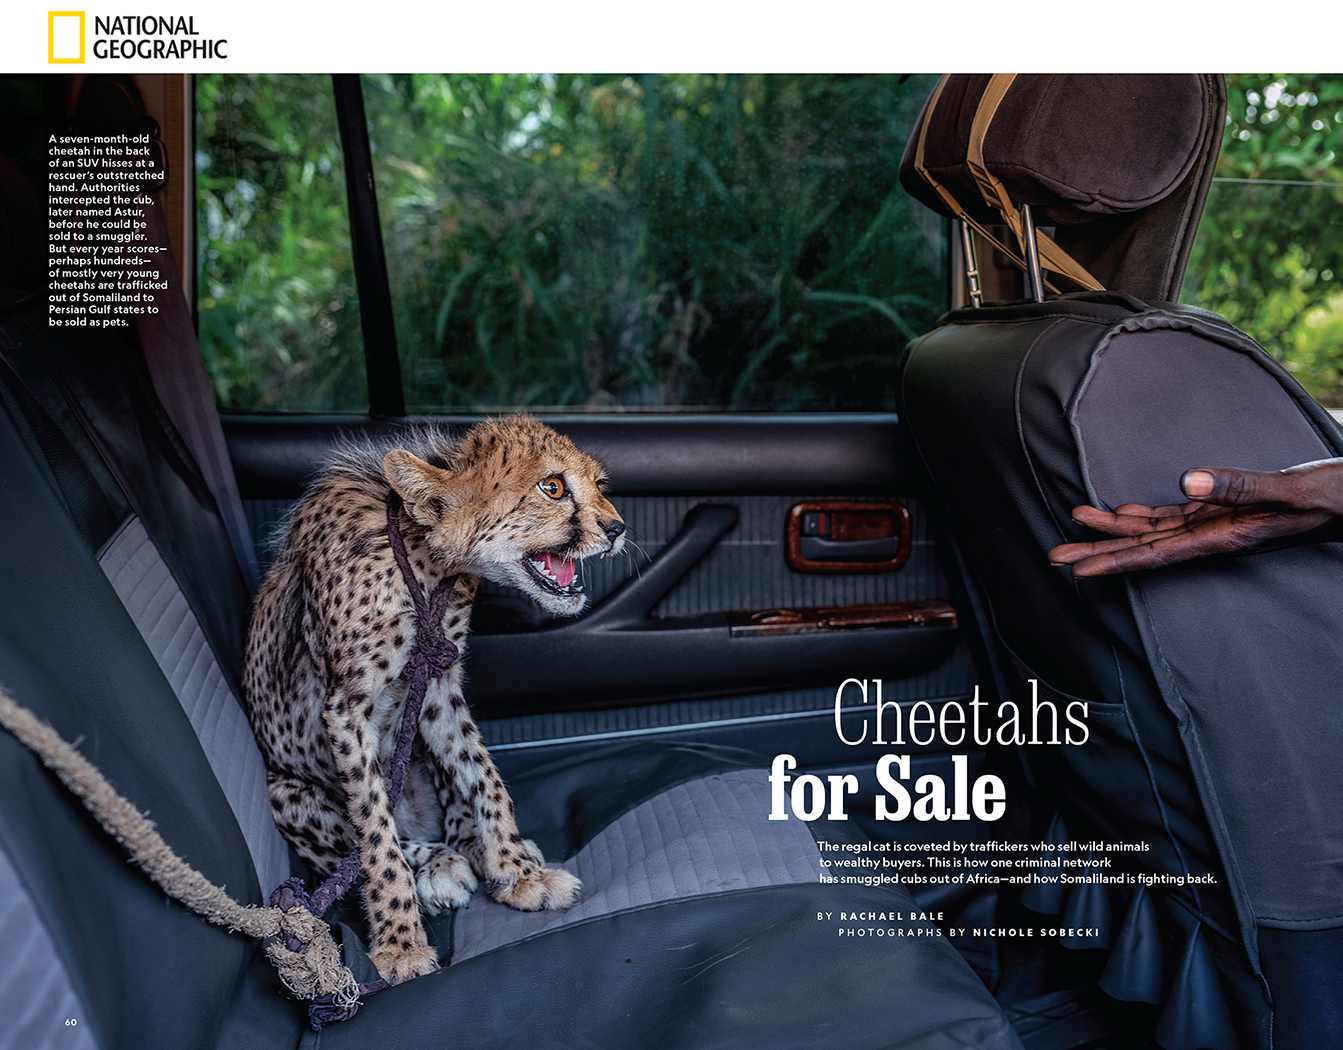 “Cheetahs for Sale,” photograph by Nichole Sobecki, September